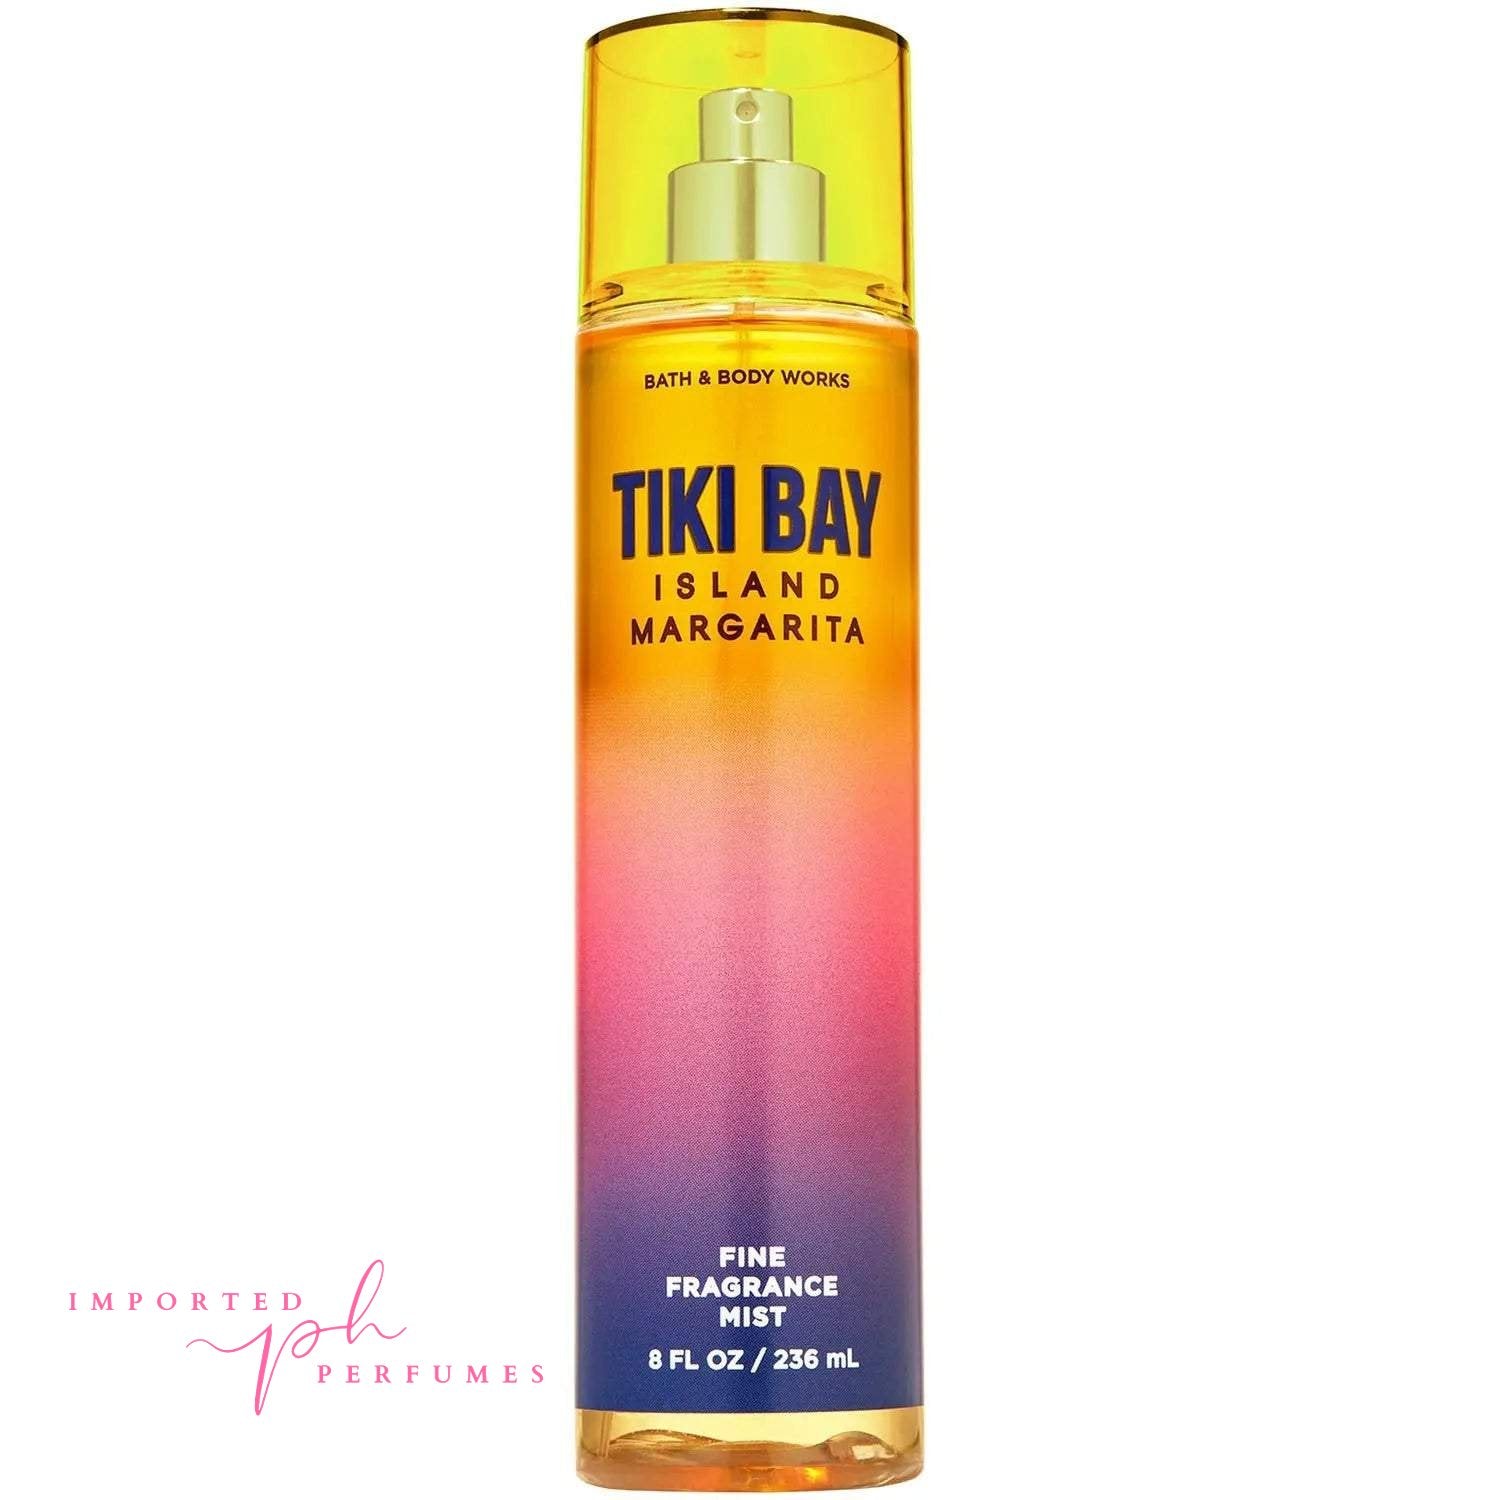 Tiki Bay Island Margarita Bath and Body Works Mist 236ml-Imported Perfumes Co-bath and body,bath and body works,for women,men,women